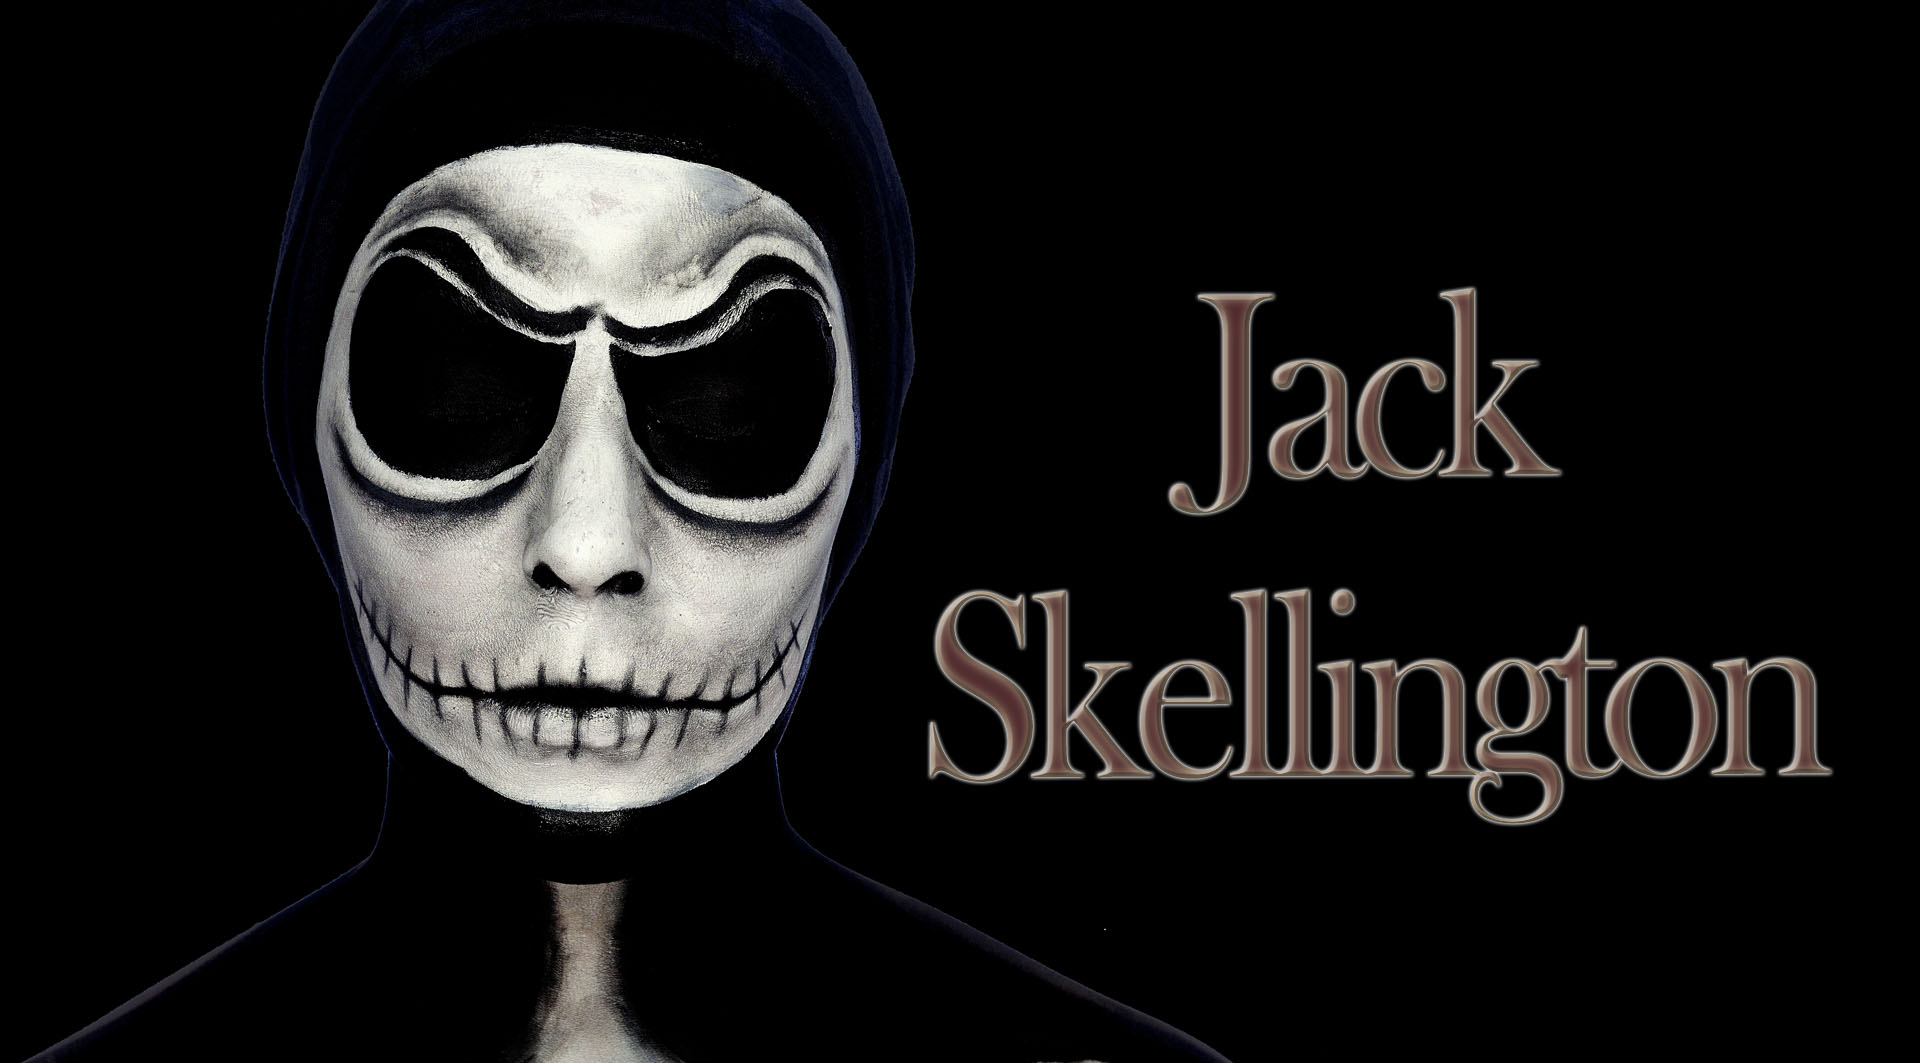 Jack skellington makeup simple